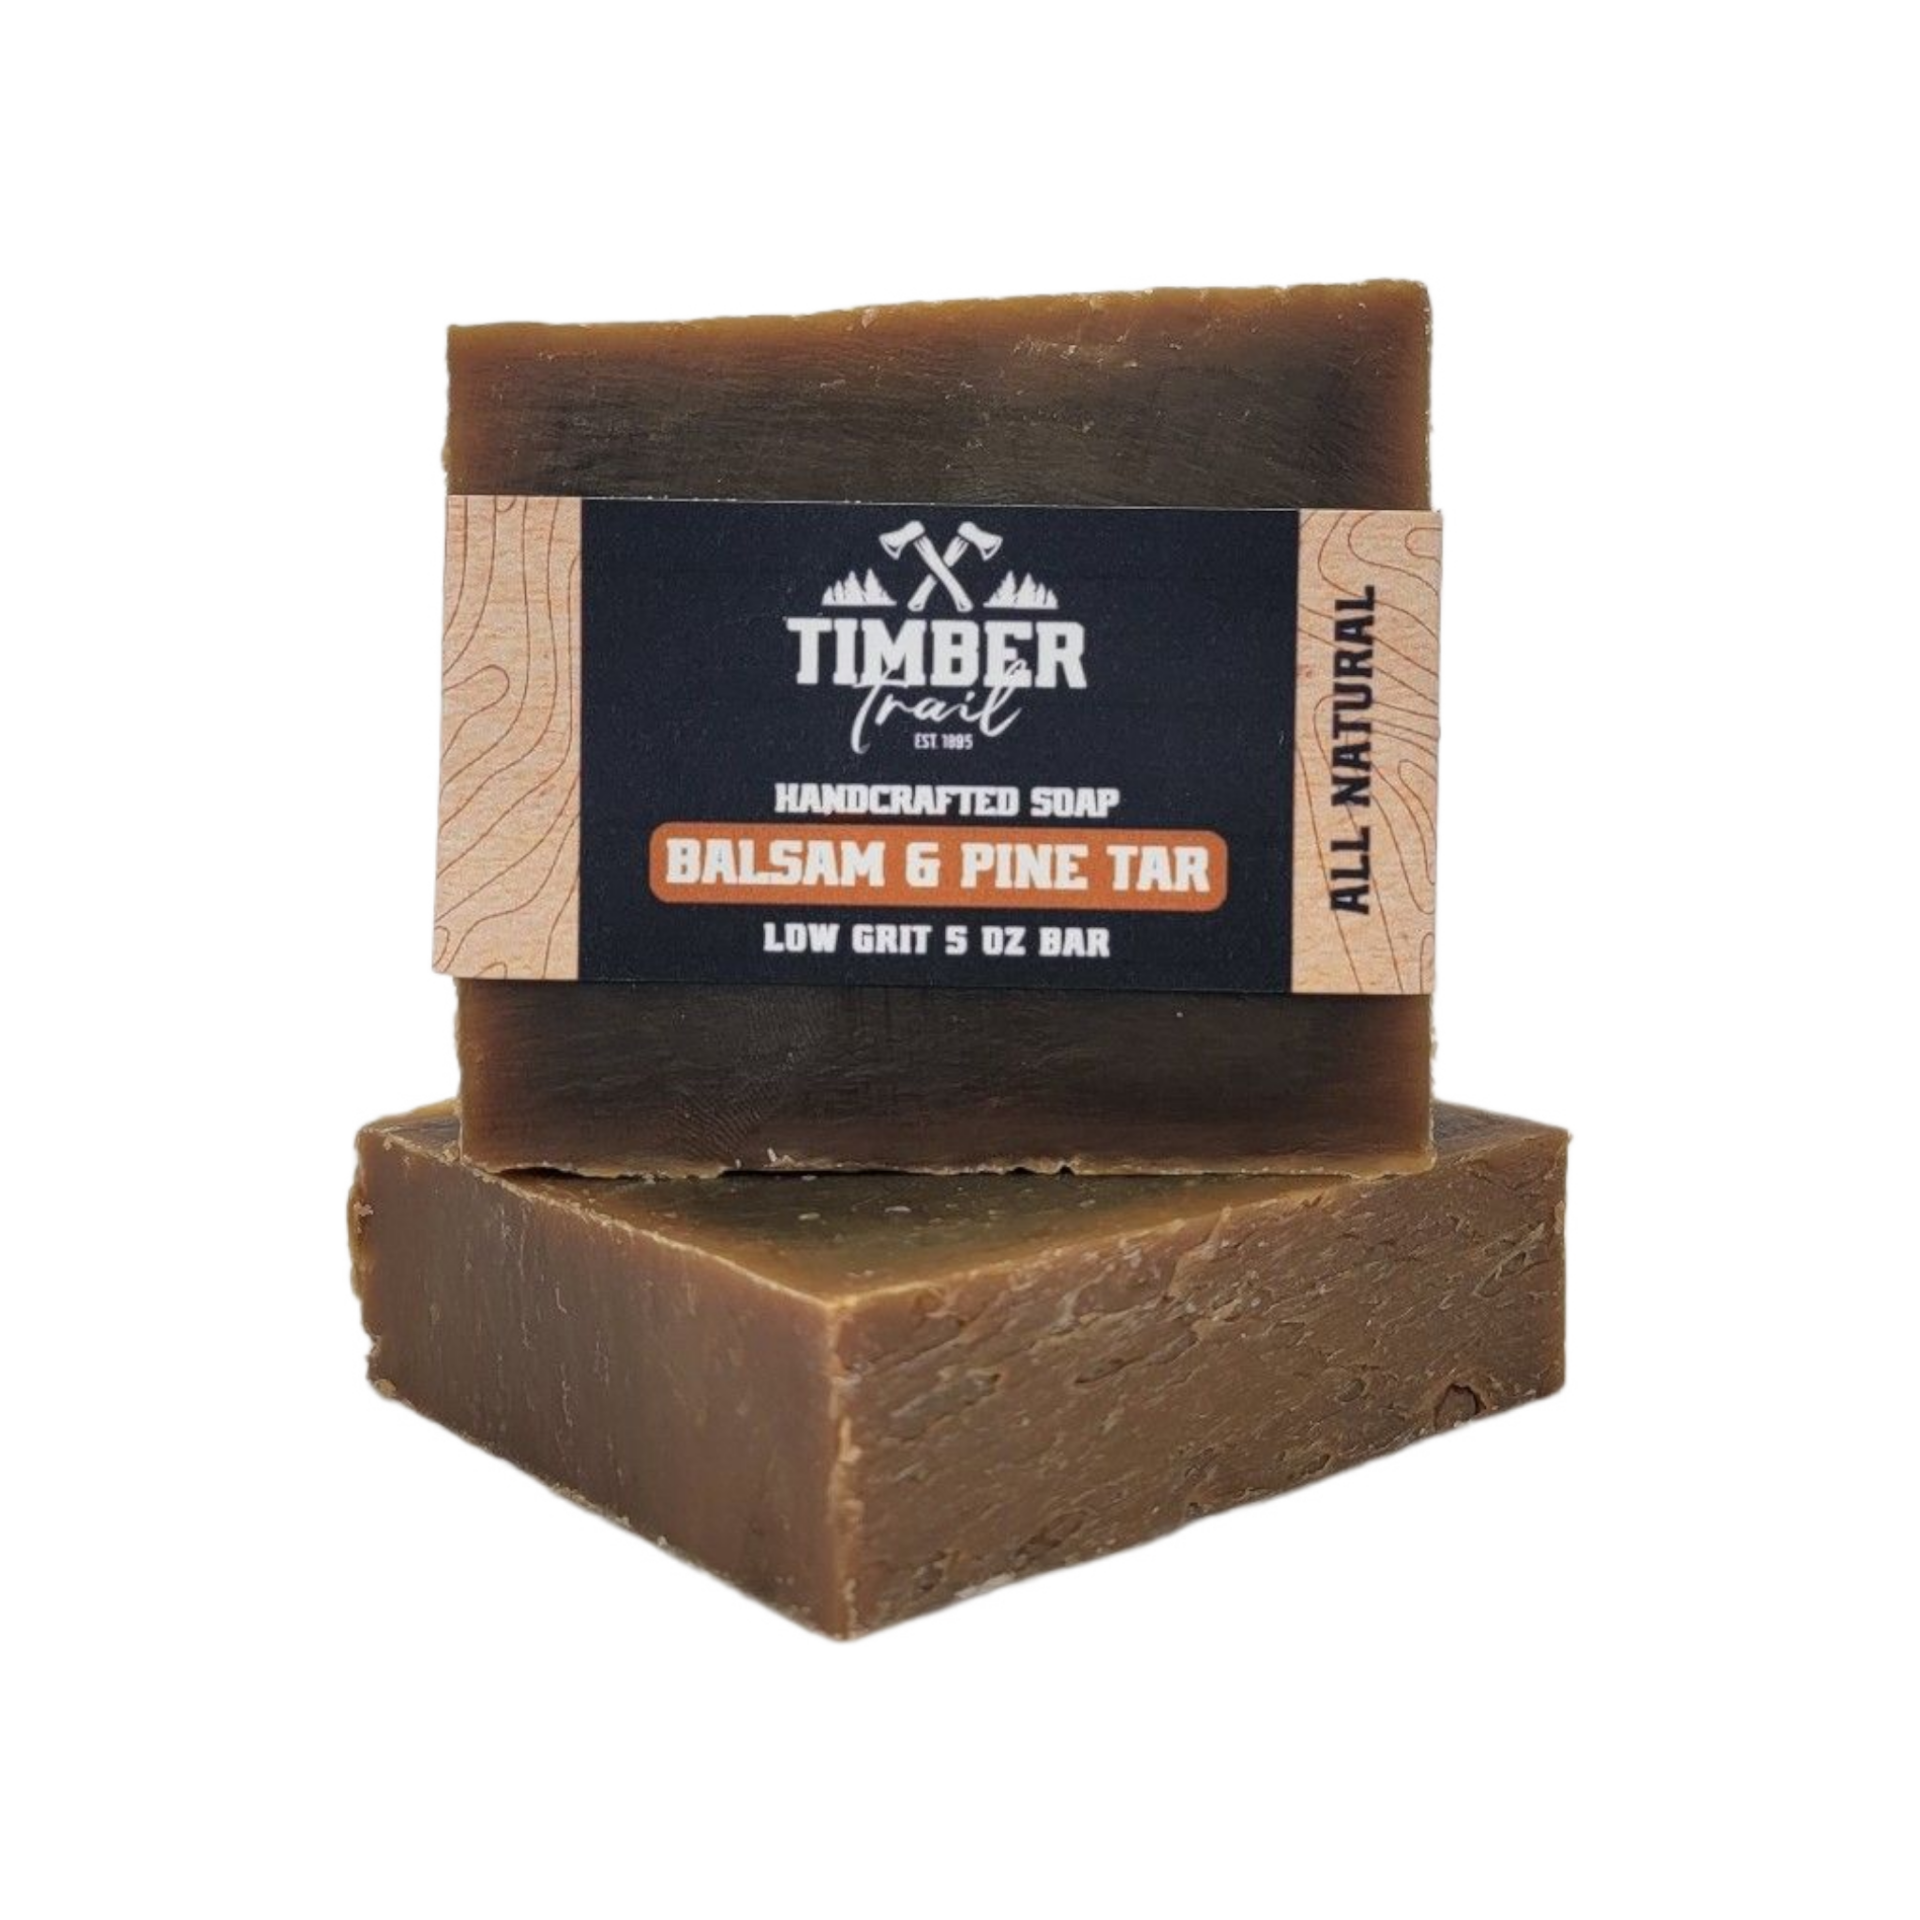 Balsam & Pine Tar Natural Bar Soap